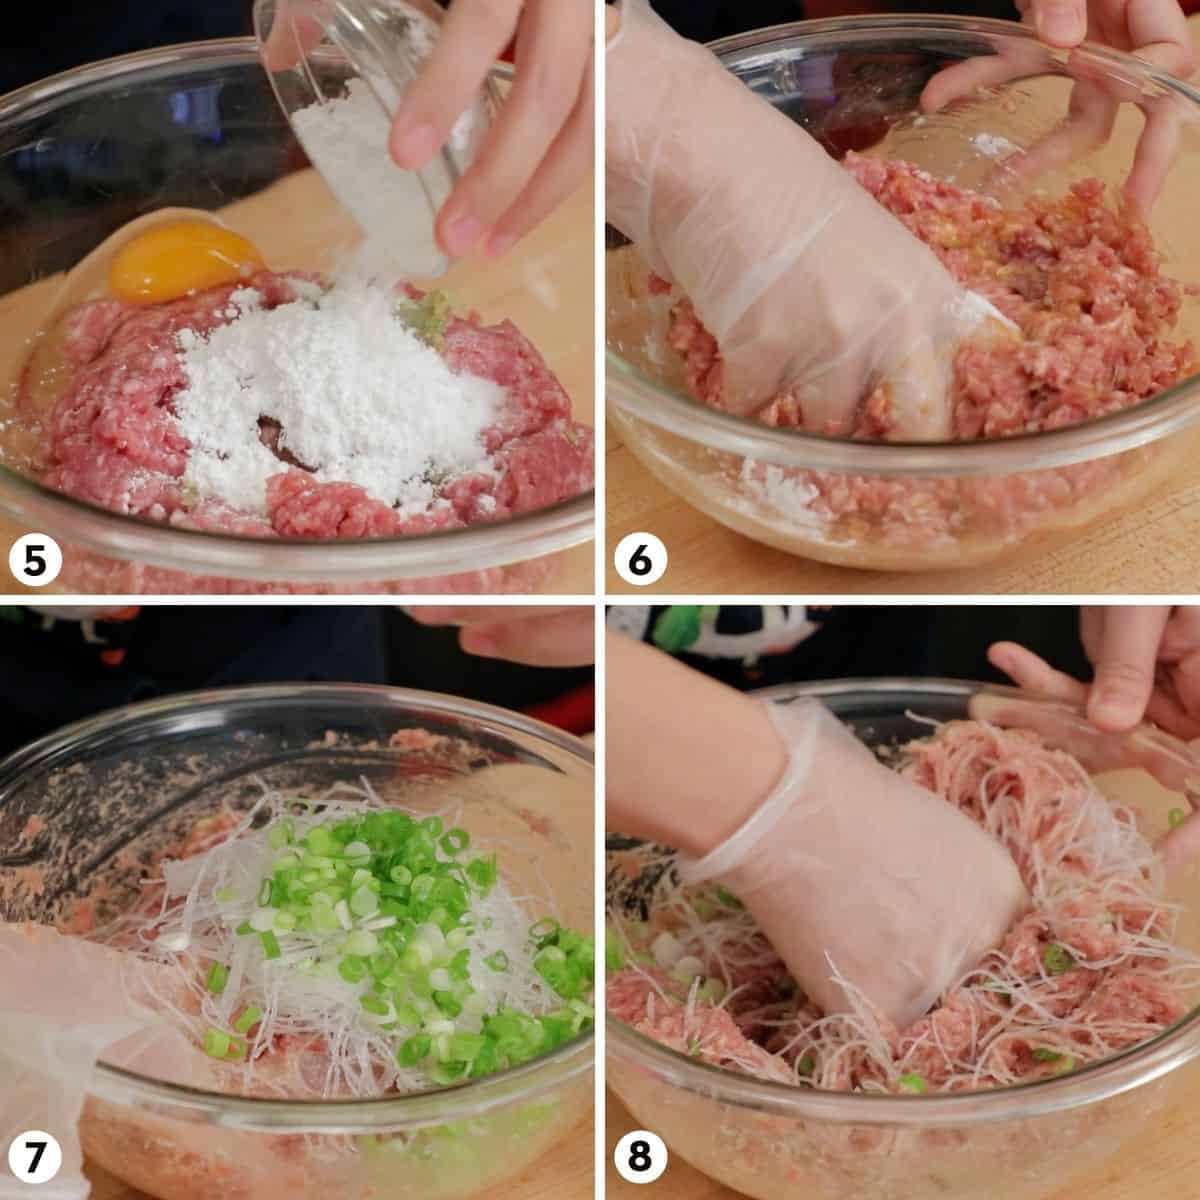 Process shots for making noodle meatballs, step 5-8